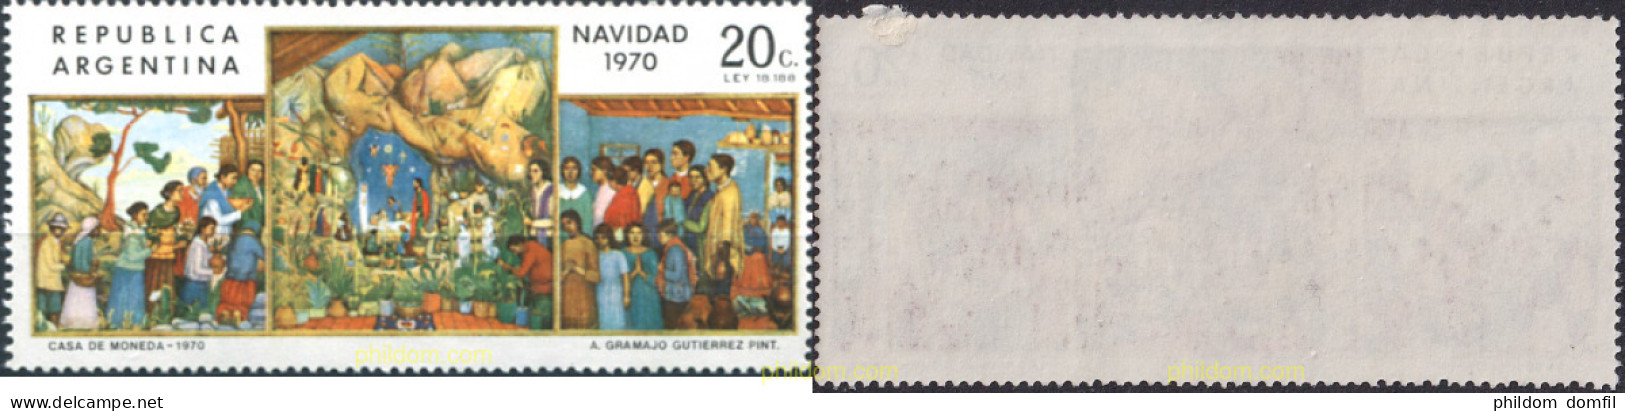 727270 MNH ARGENTINA 1970 NAVIDAD - Ongebruikt